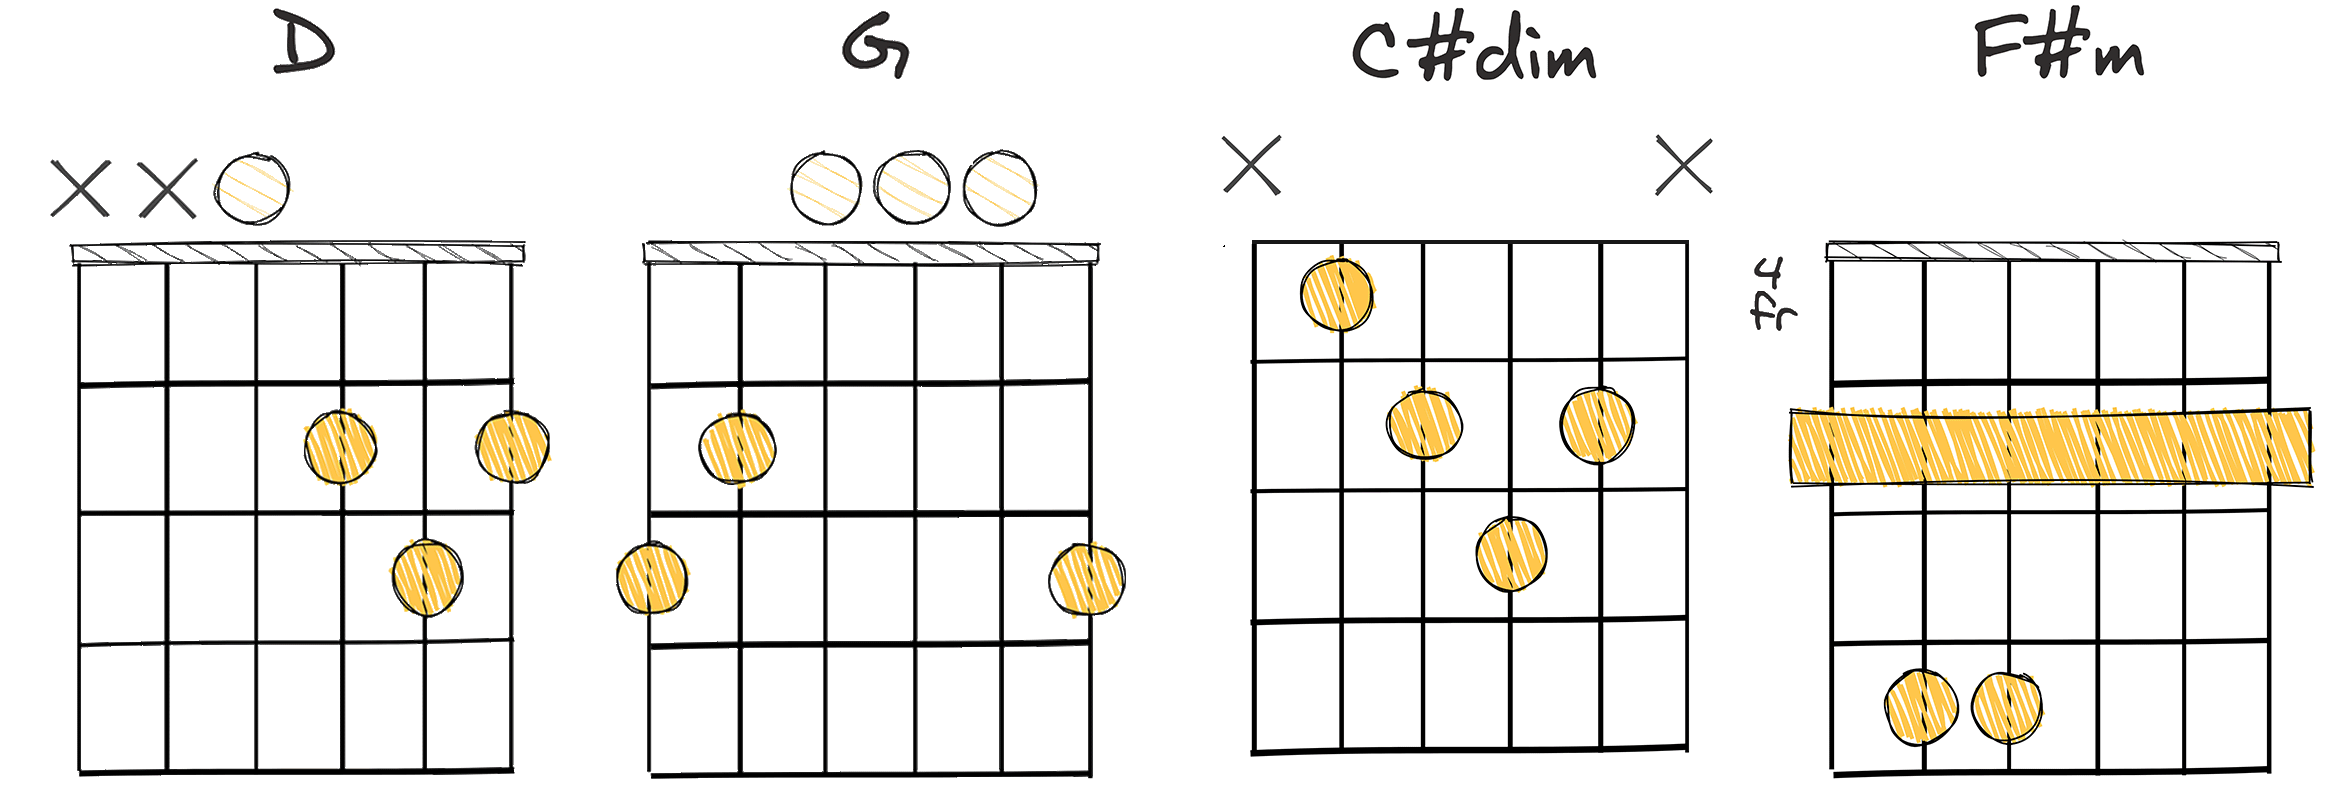 I-IV-vii°-iii (1-4-7-3) chords diagram